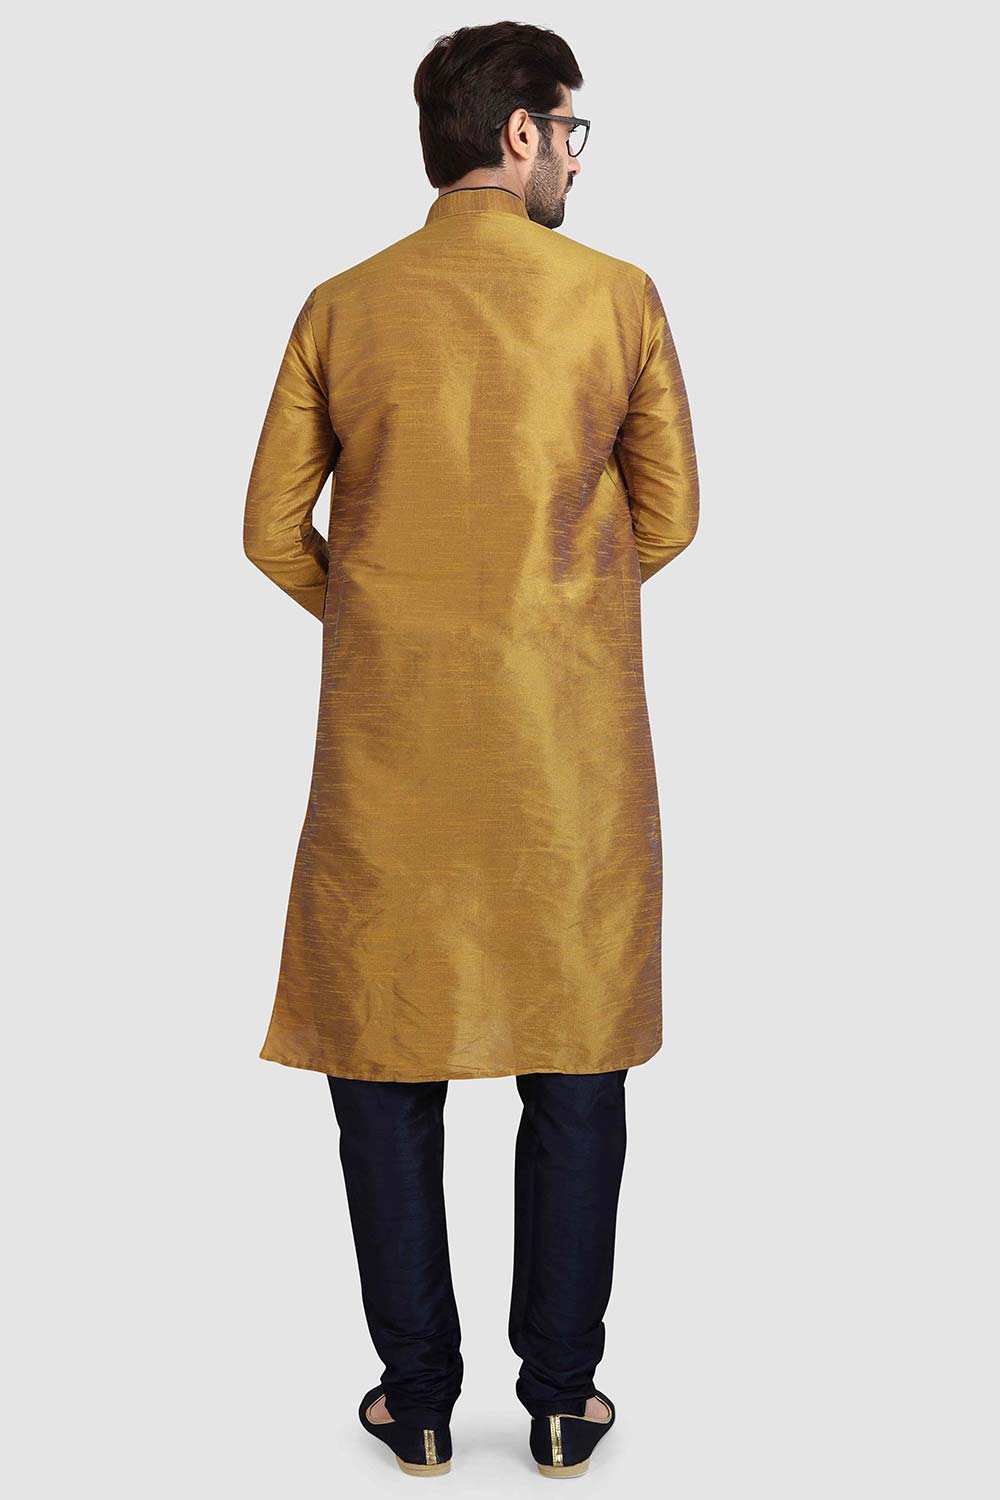 Buy Gold Art Dupion Silk Plain Kurta Pajama Online - Karmaplace